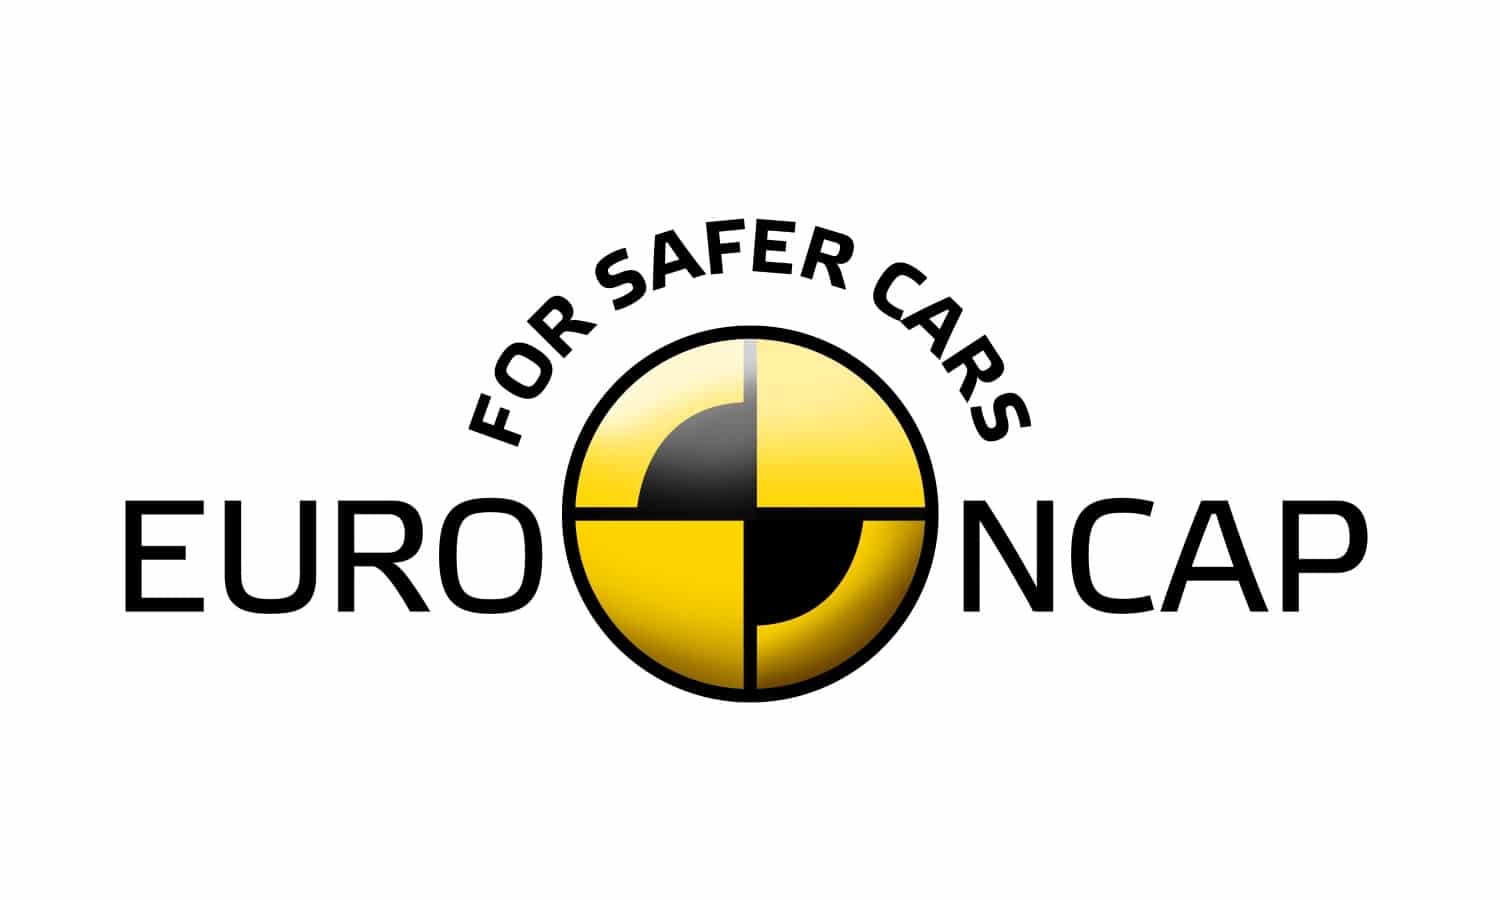 EuroNCAP logo